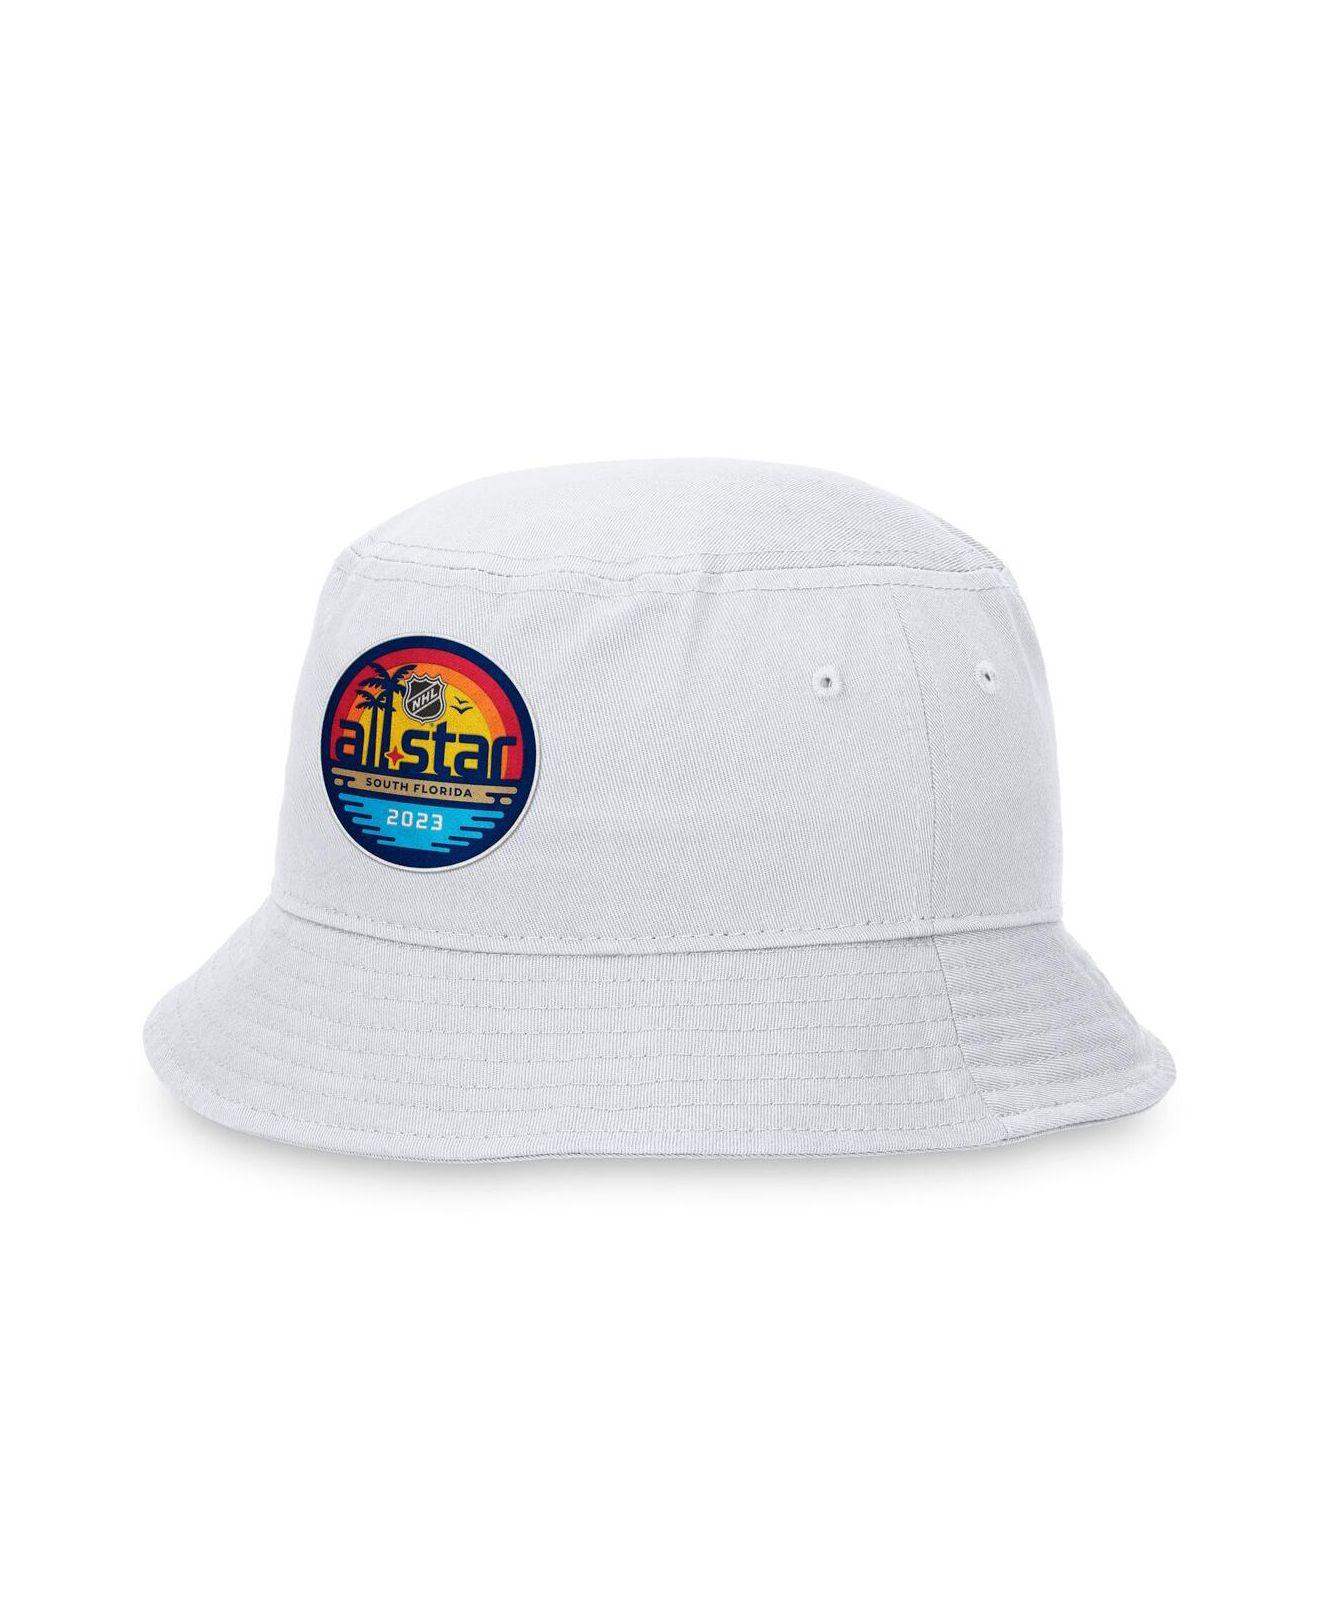 Fanatics Branded White 2023 Nhl All-star Game Bucket Hat for Men